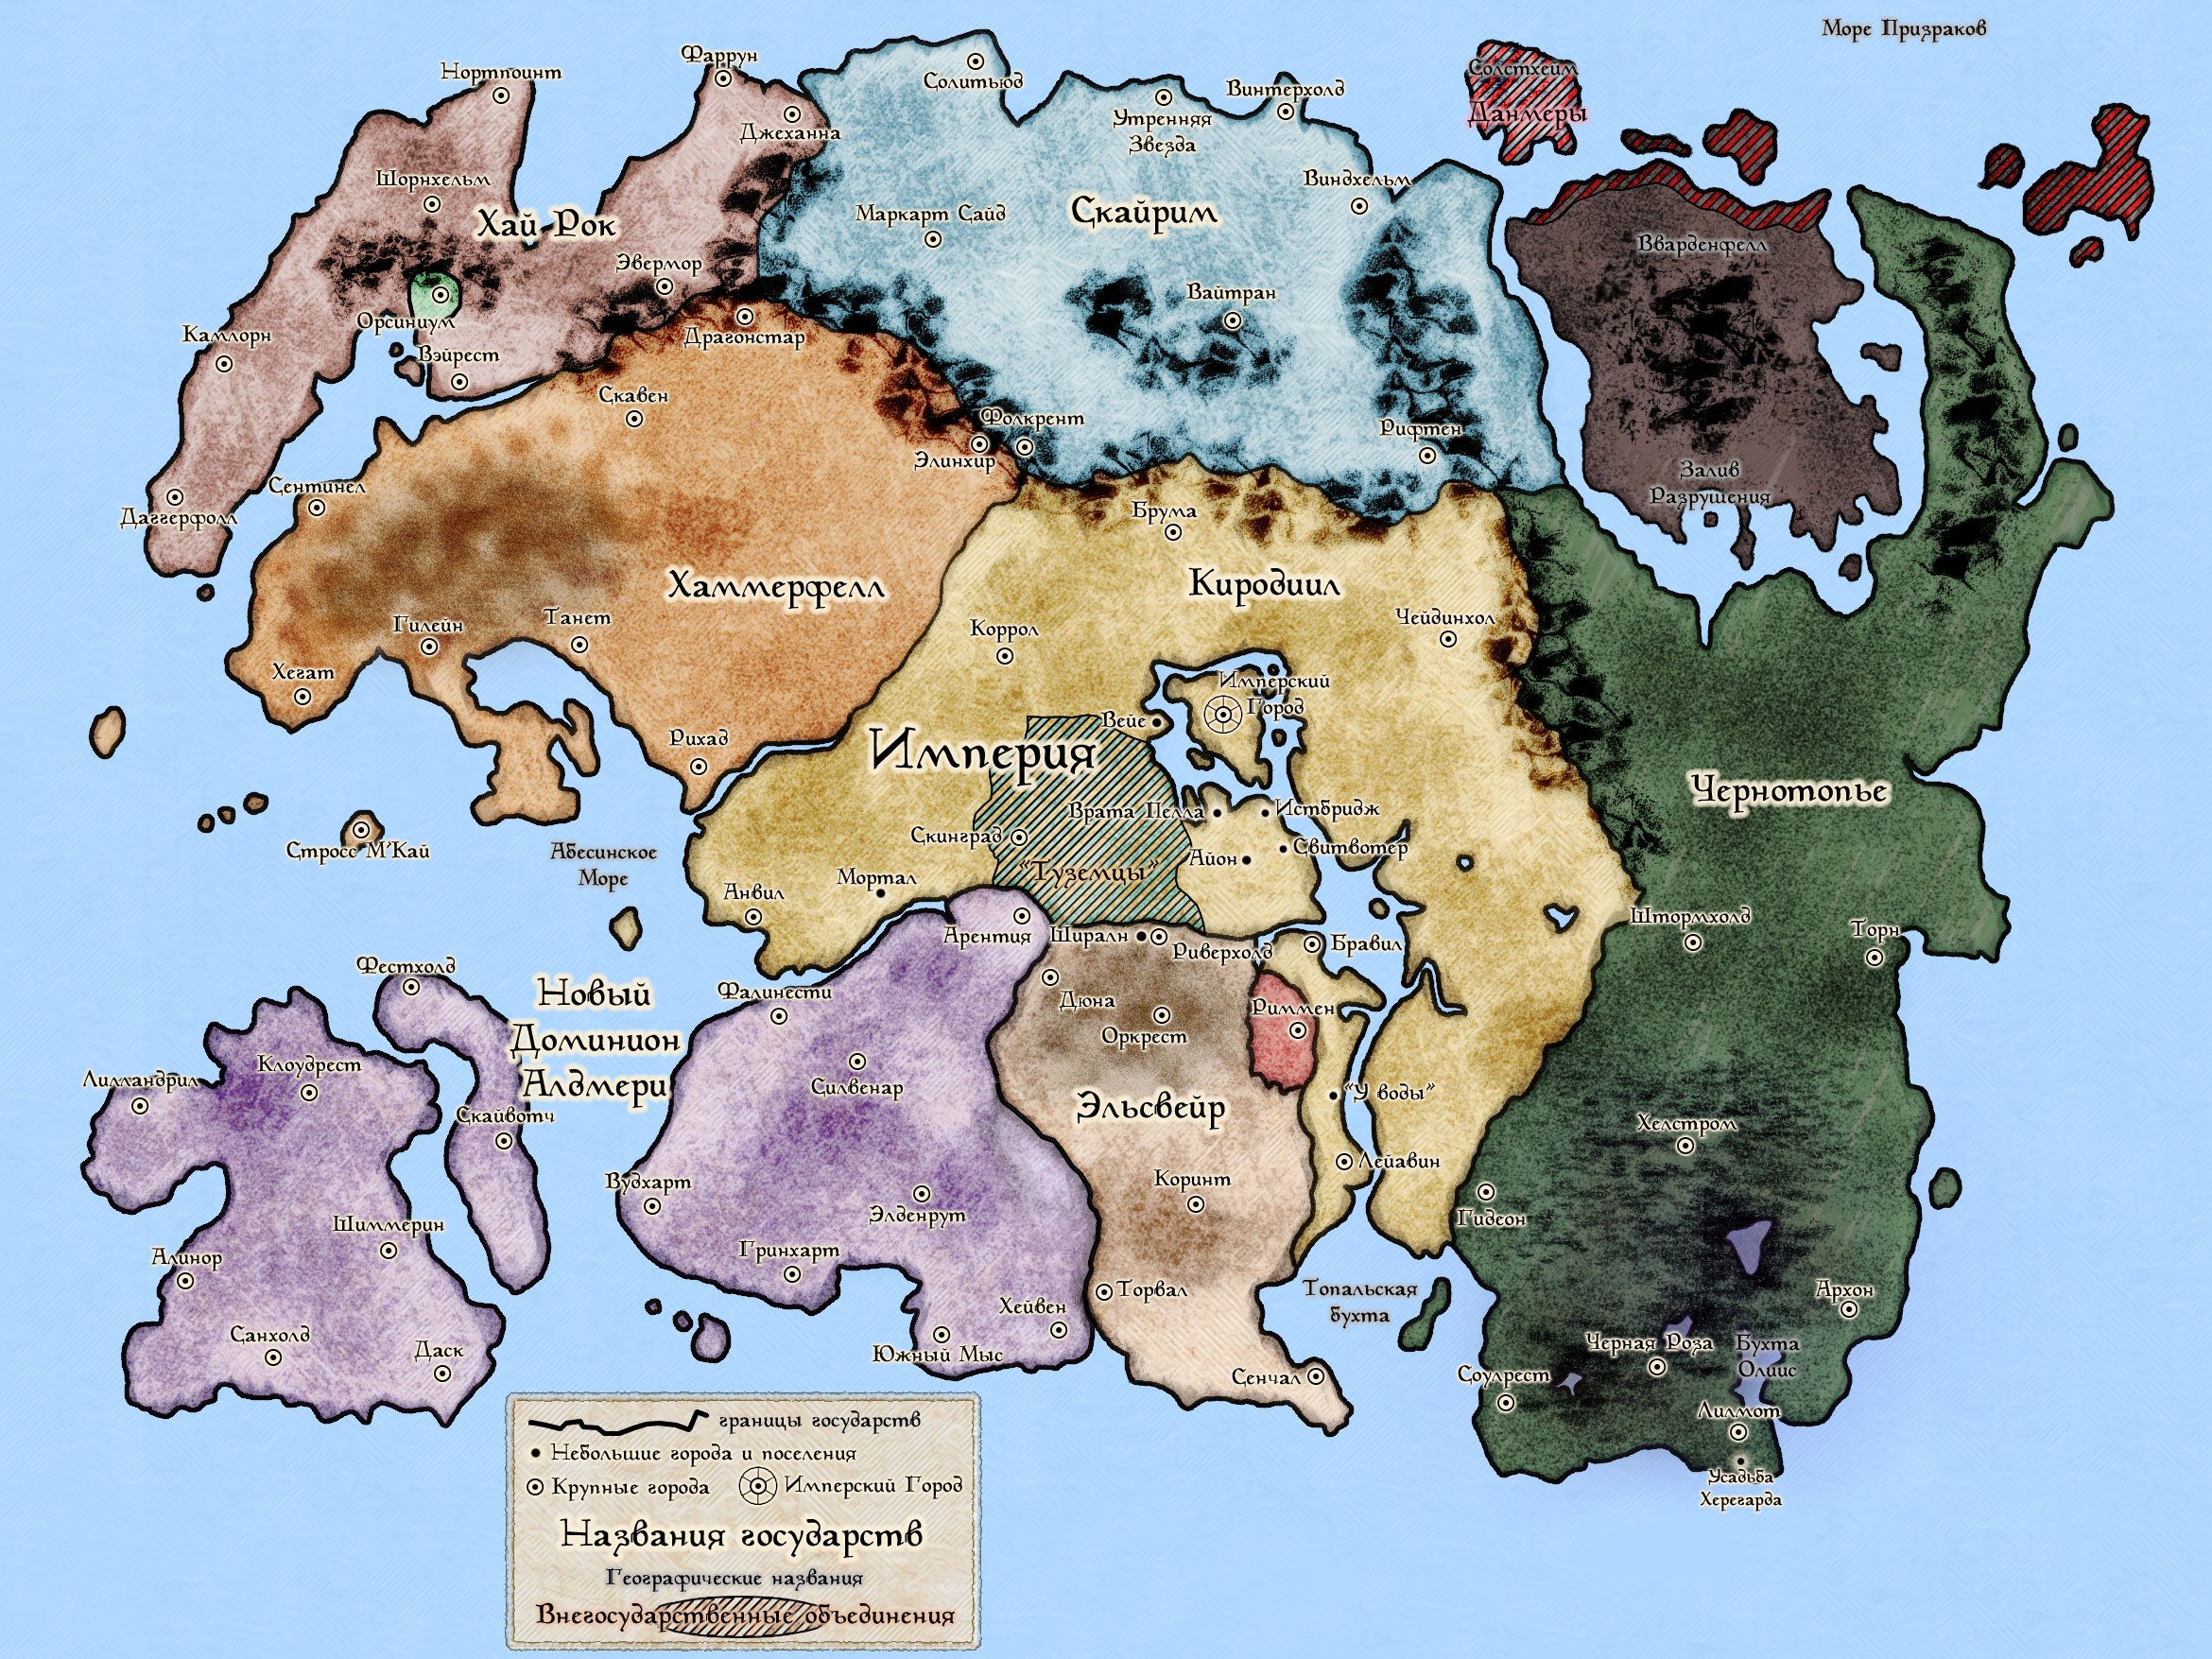 The Elder Scrolls V: Skyrim, The Elder Scrolls, The Elder Scrolls IV: Oblivion, The Elder Scrolls III: Morrowind, Map Wallpaper